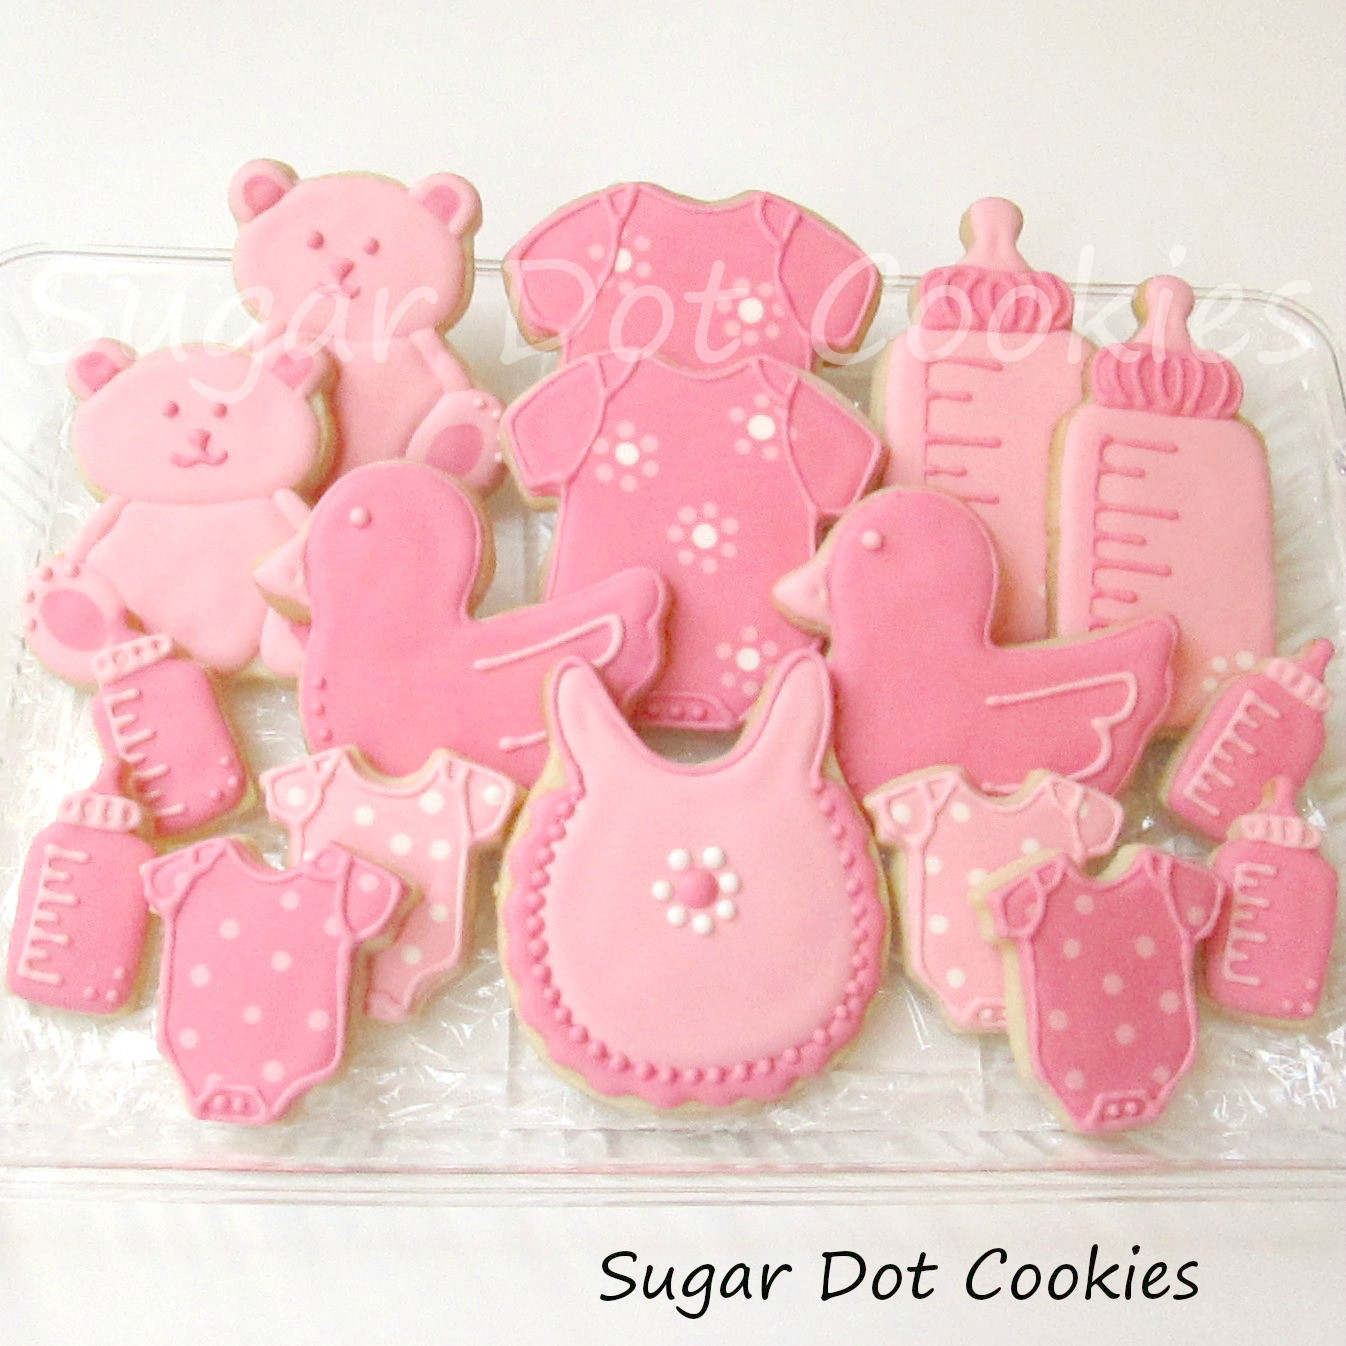 Baby Sugar Cookies
 New Baby Sugar Cookies With Royal Icing